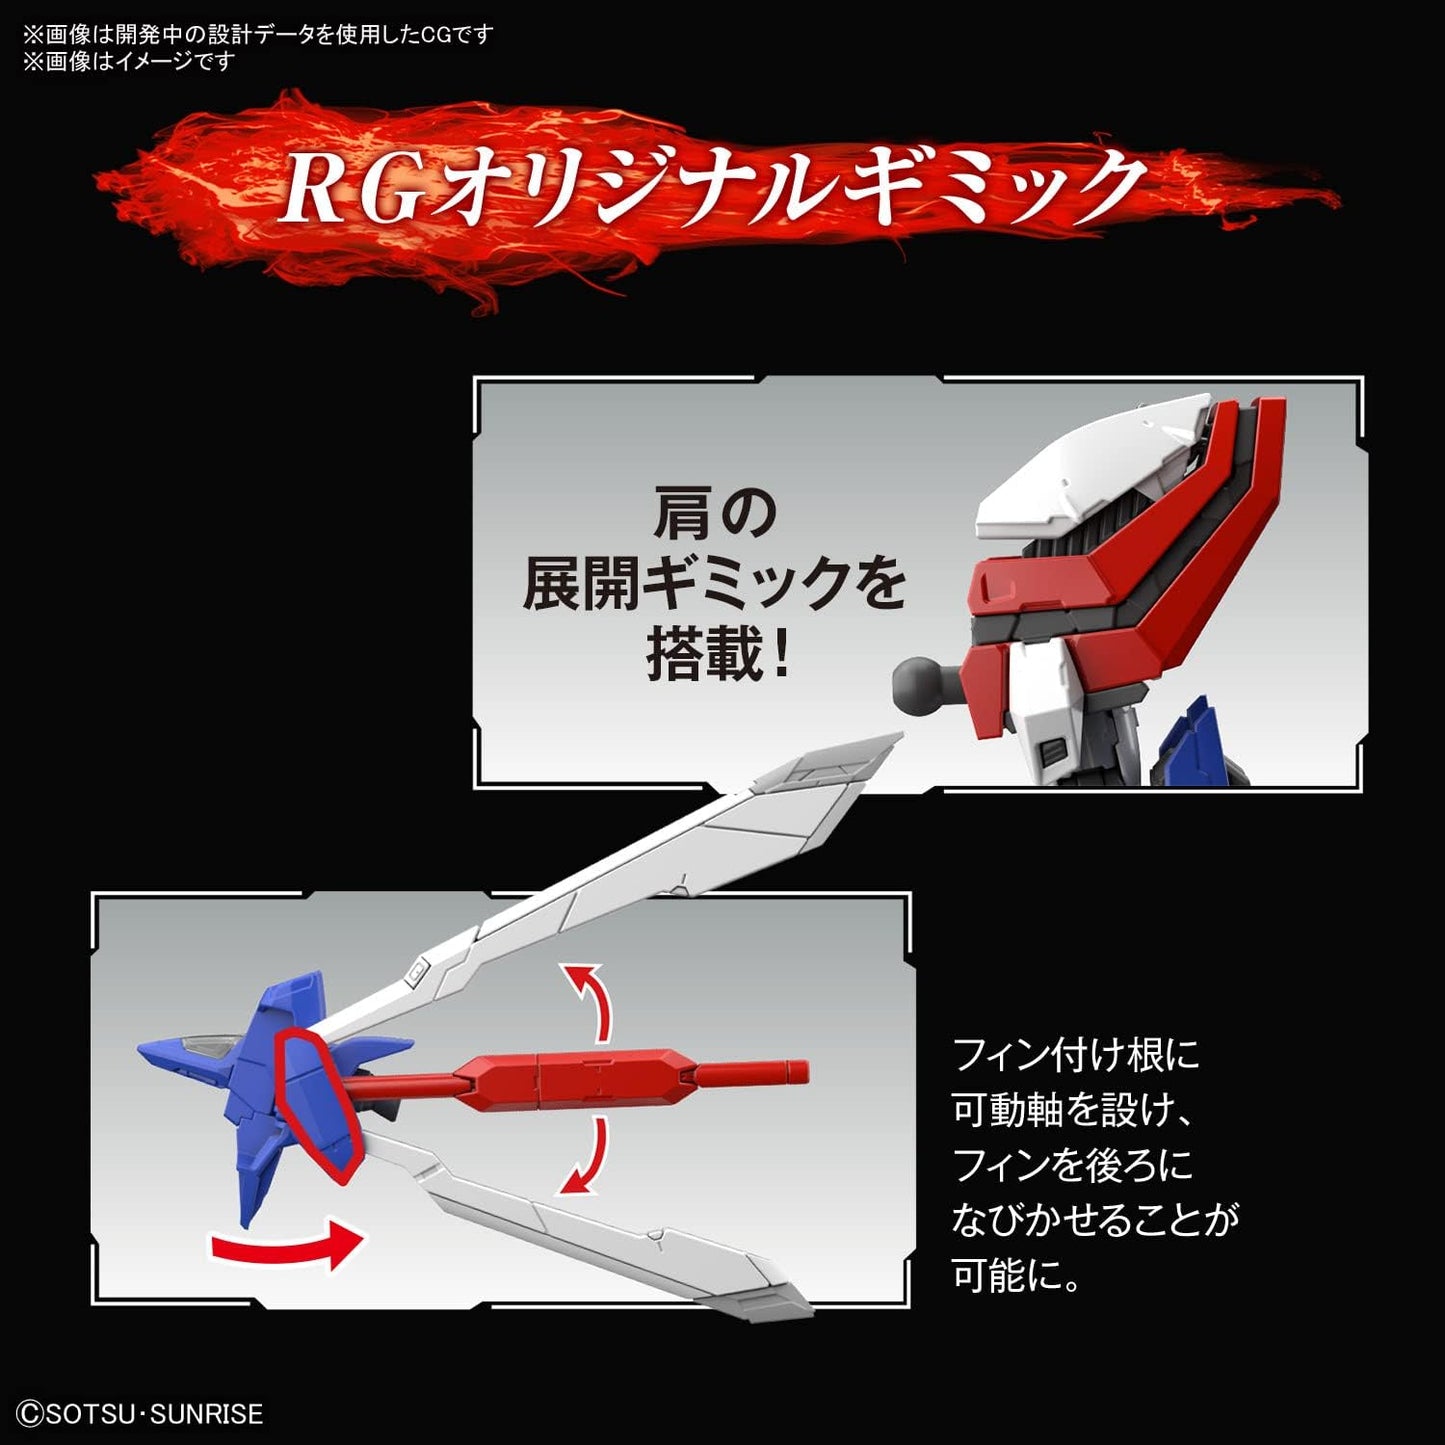 RG 1/144 "Mobile Fighter G Gundam" God Gundam | animota